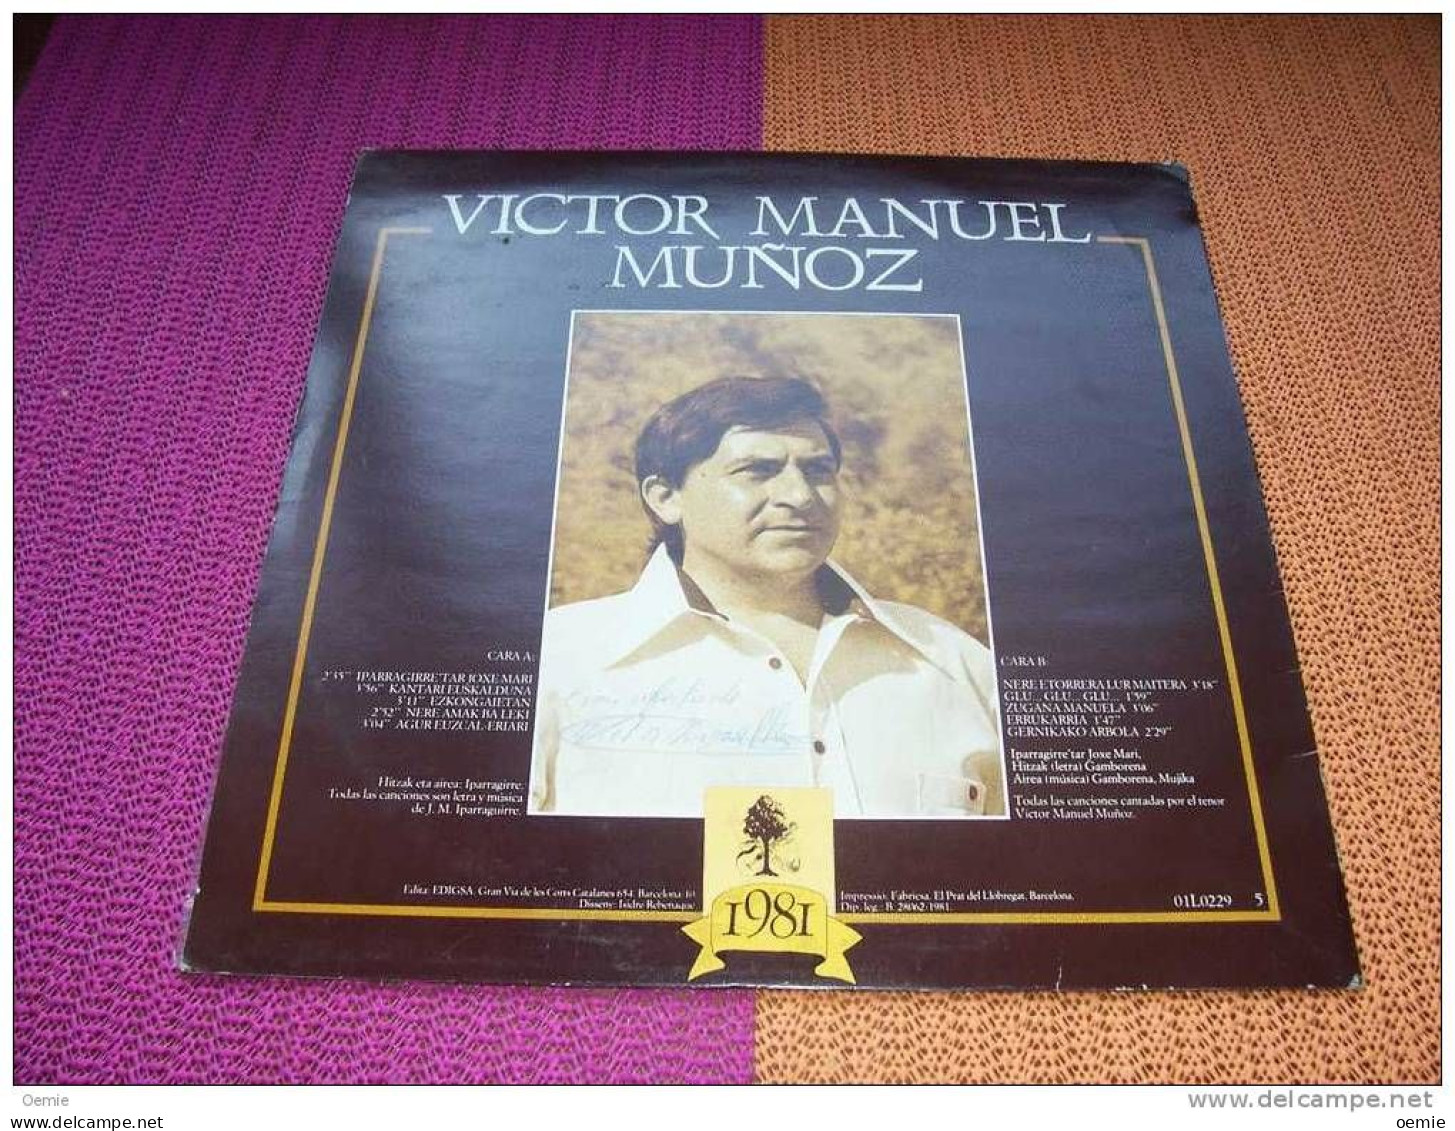 VICTOR MANUEL MUNOZ  / IPARRAGIRRE'TAR  JOXE MARI - Altri - Musica Spagnola